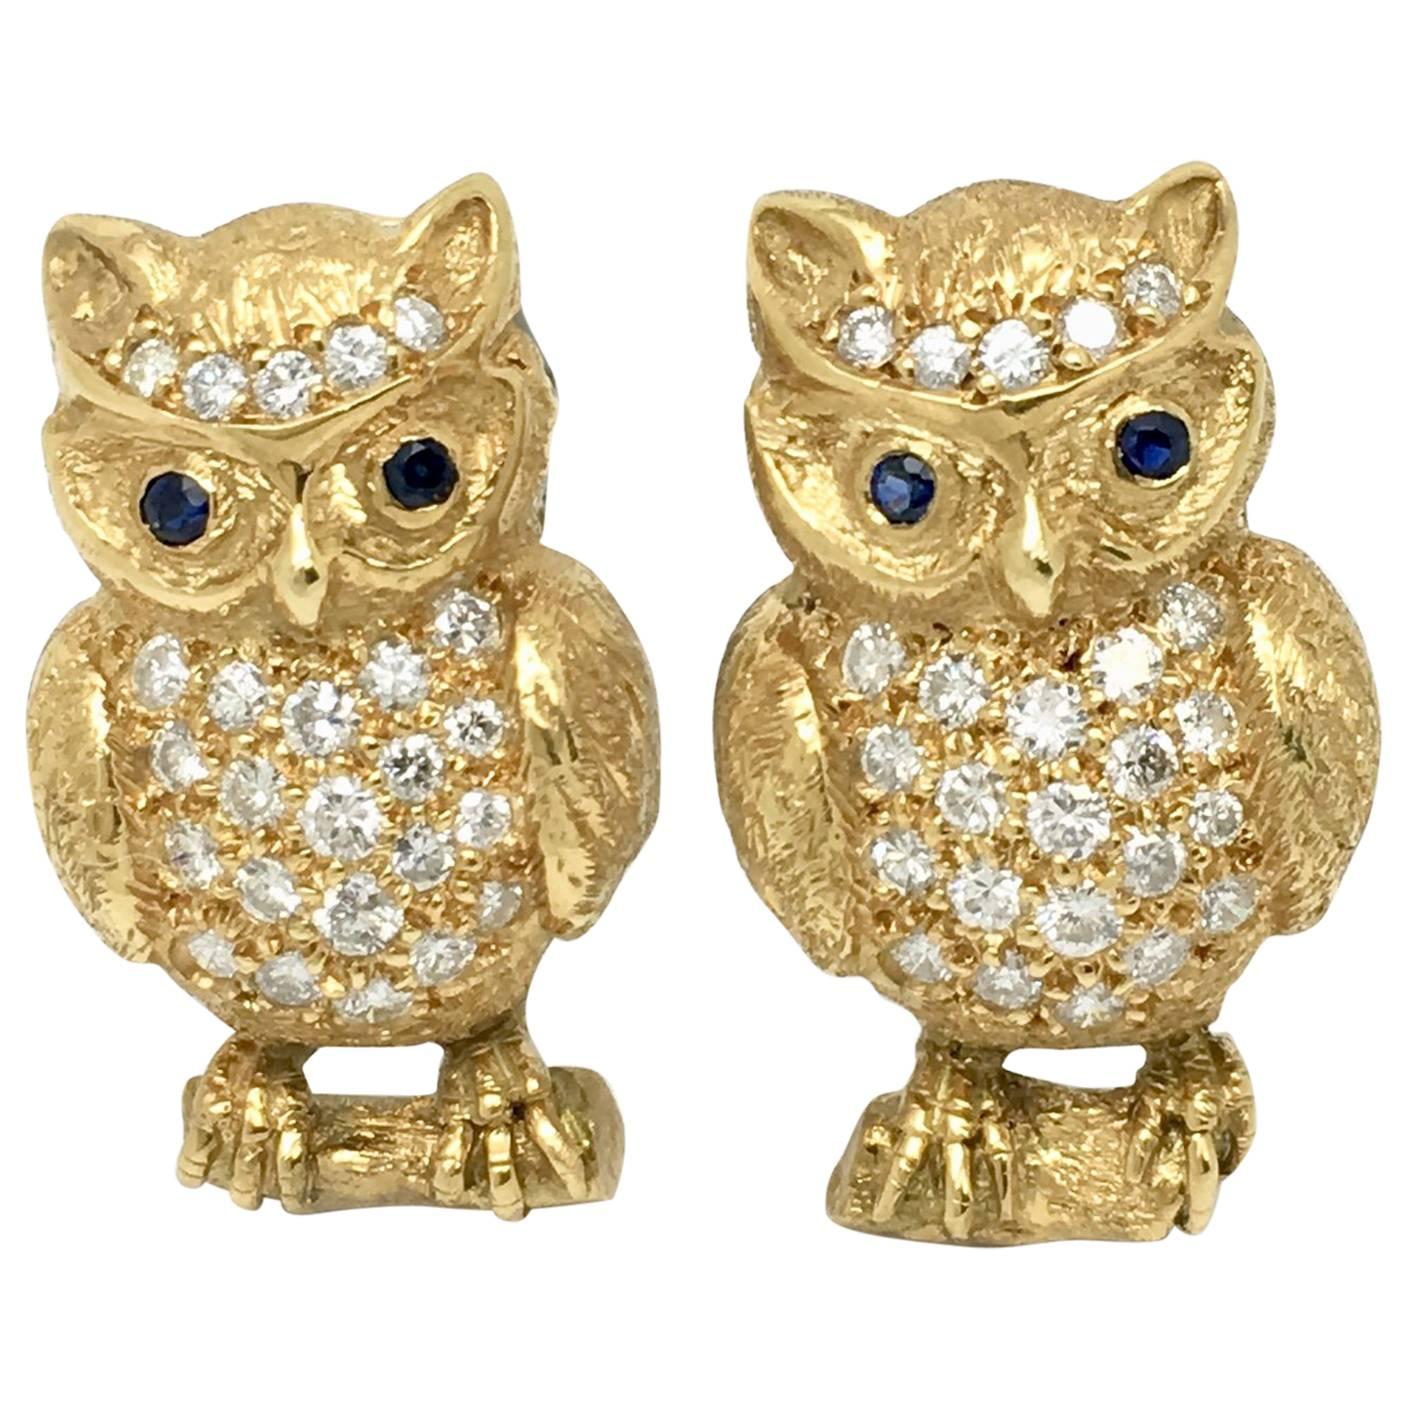 Owl Cufflinks 18 Karat Yellow Gold with Diamonds and Blue Sapphire